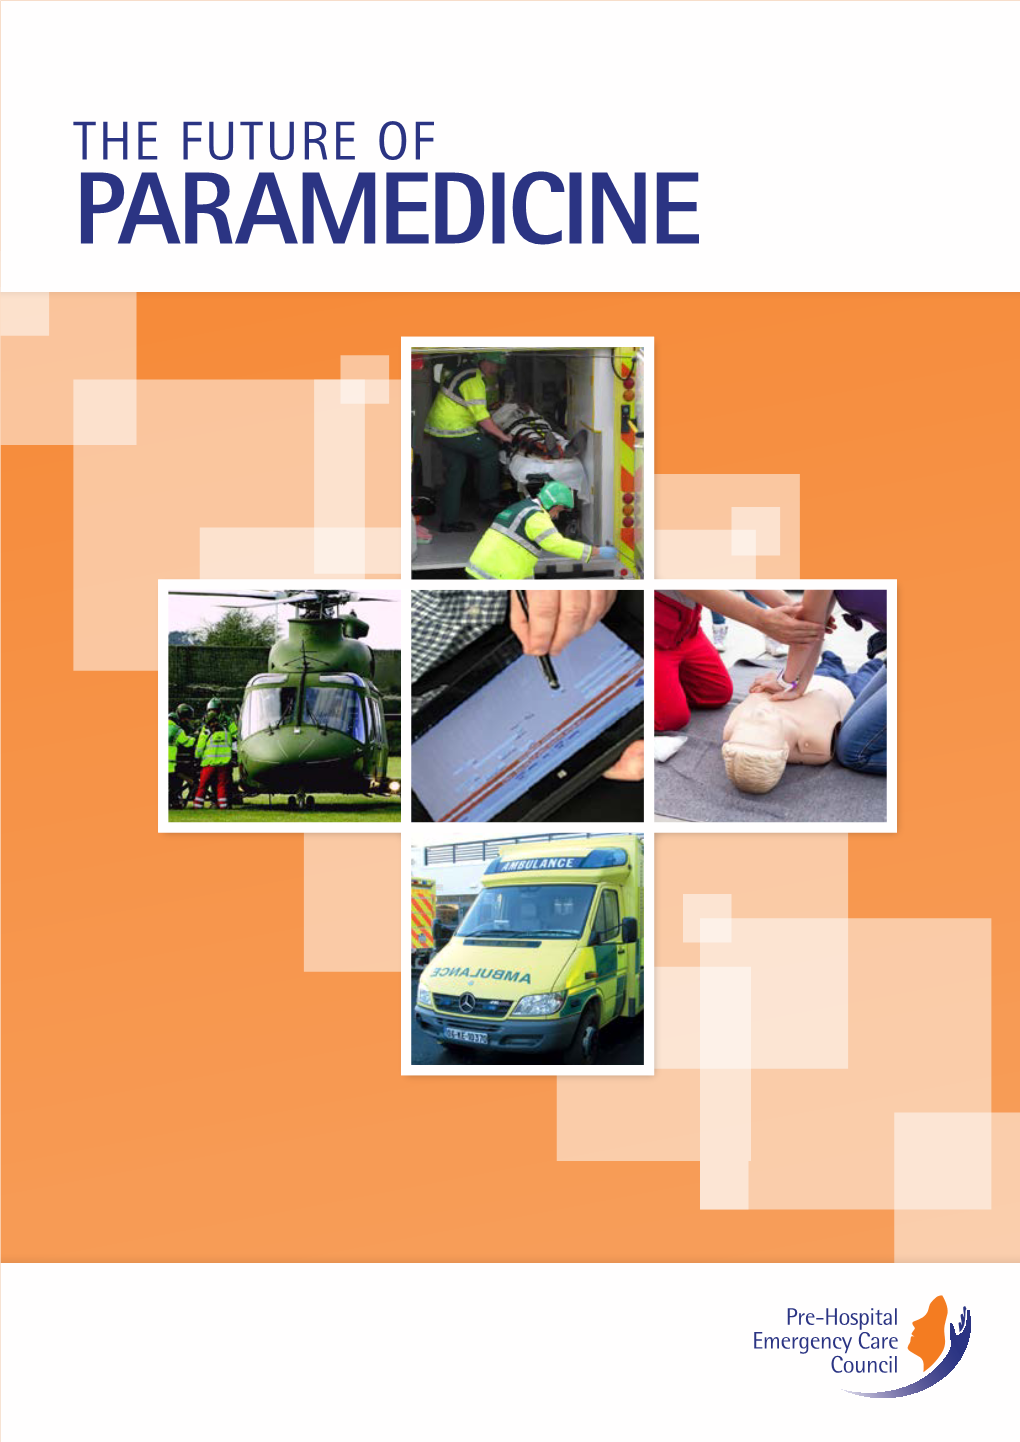 The Future of Paramedicine the Future of Paramedicine